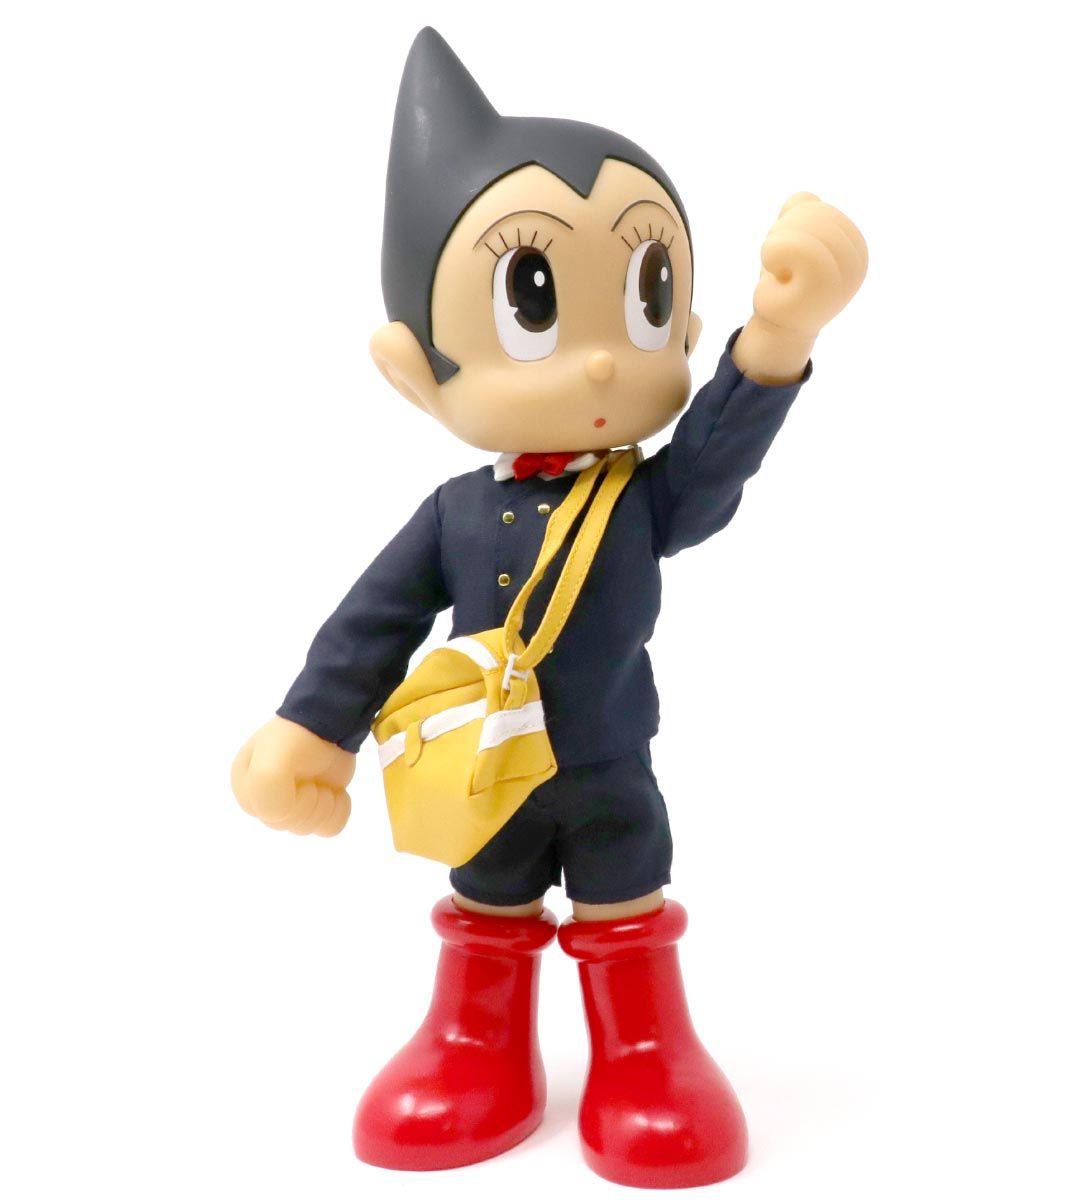 Astro Boy Master Series 07